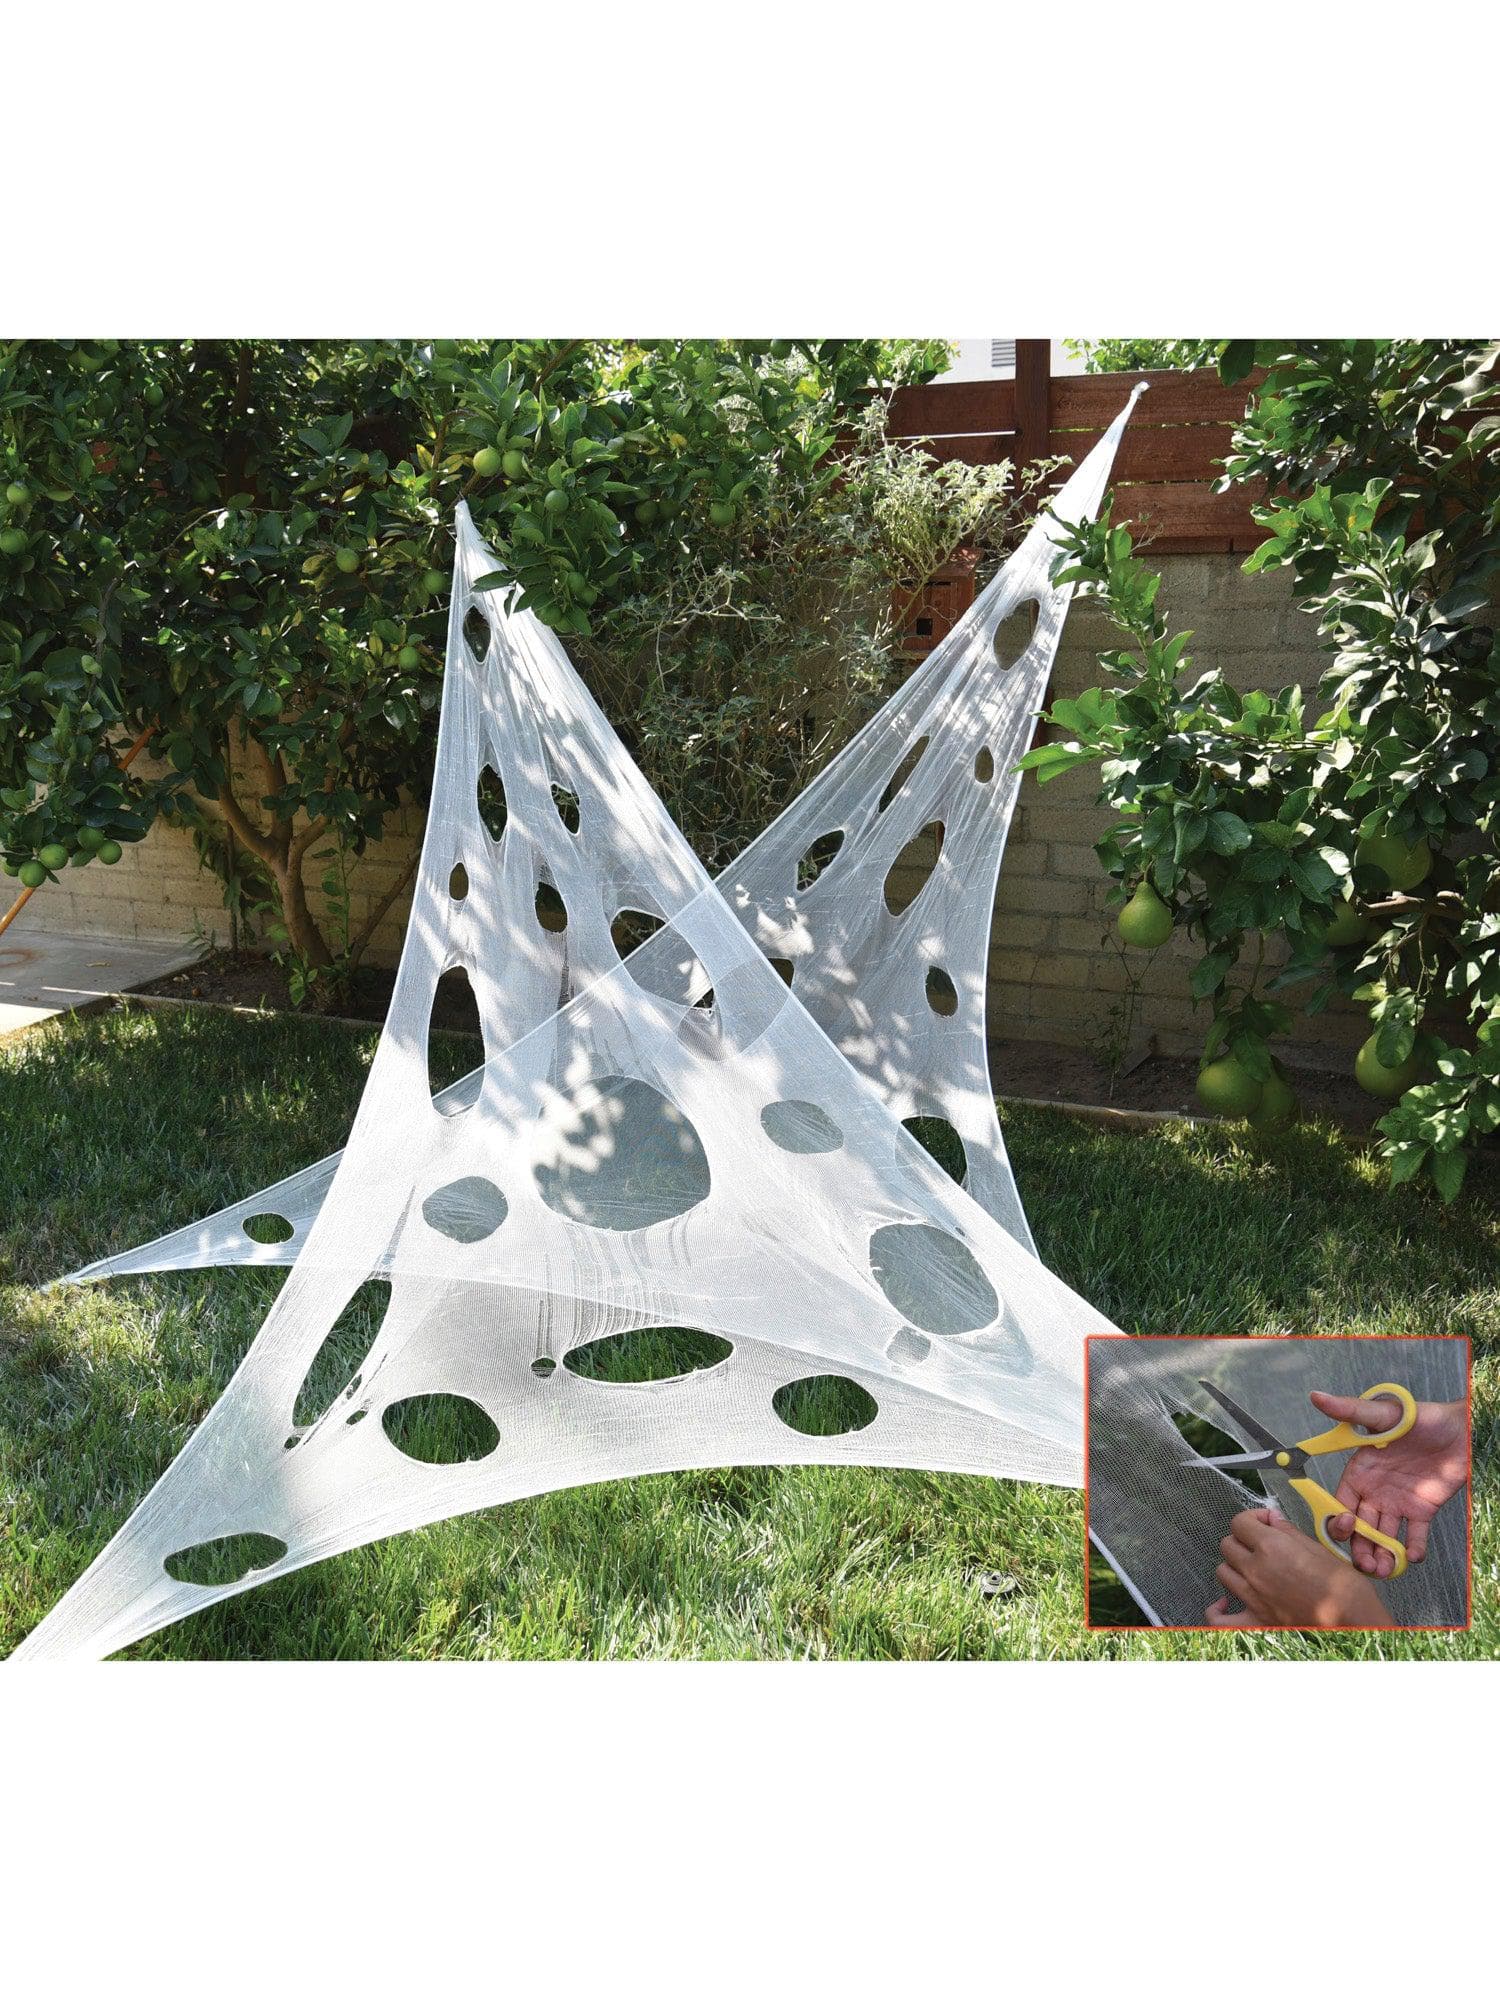 16 Foot White Customizable Elastic Spider Web Yard Decor - costumes.com